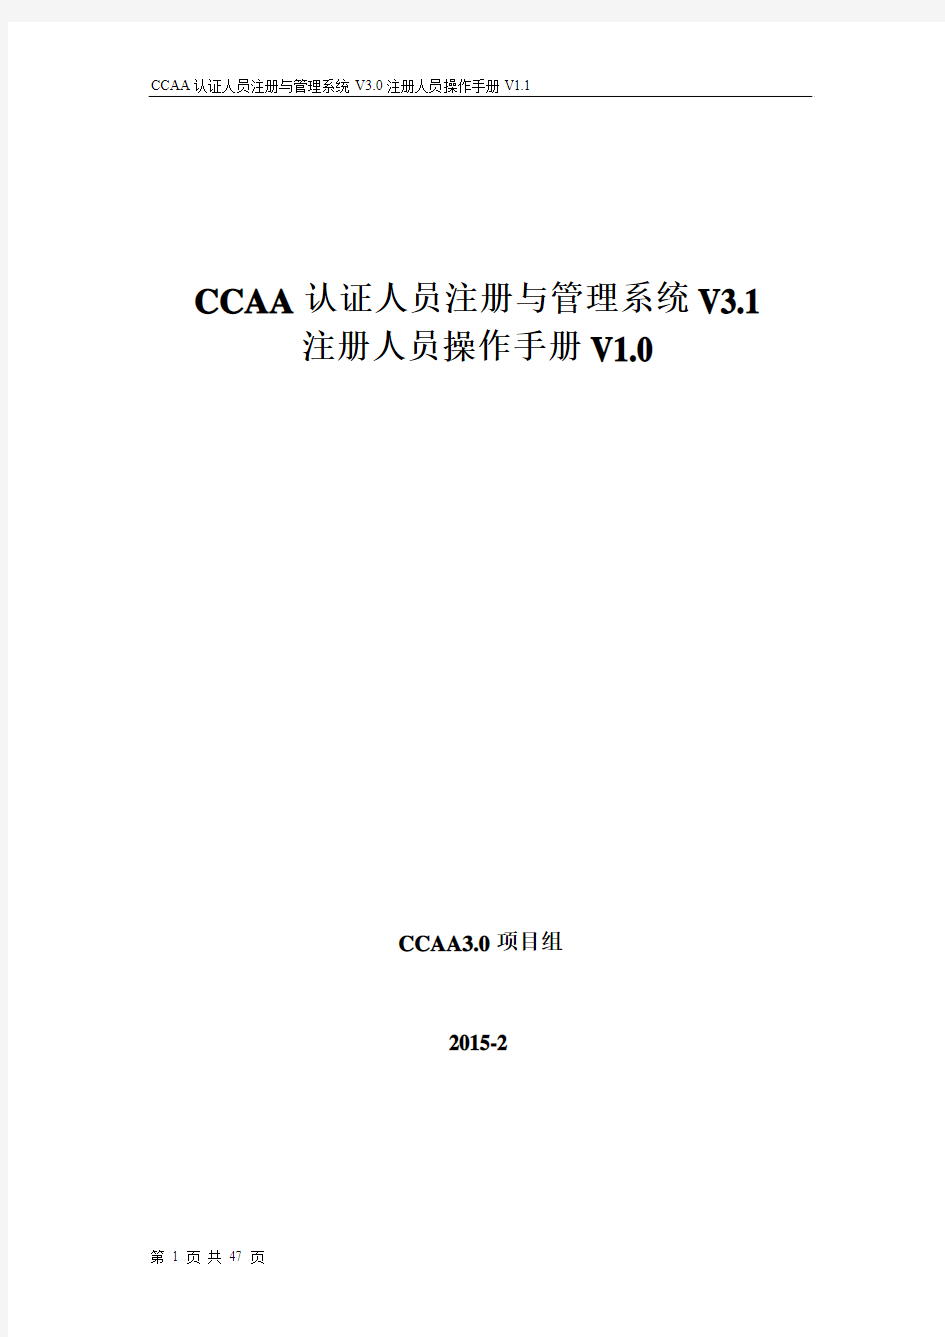 CCAA认证人员注册与管理系统V3.1-注册人员操作手册V1.0